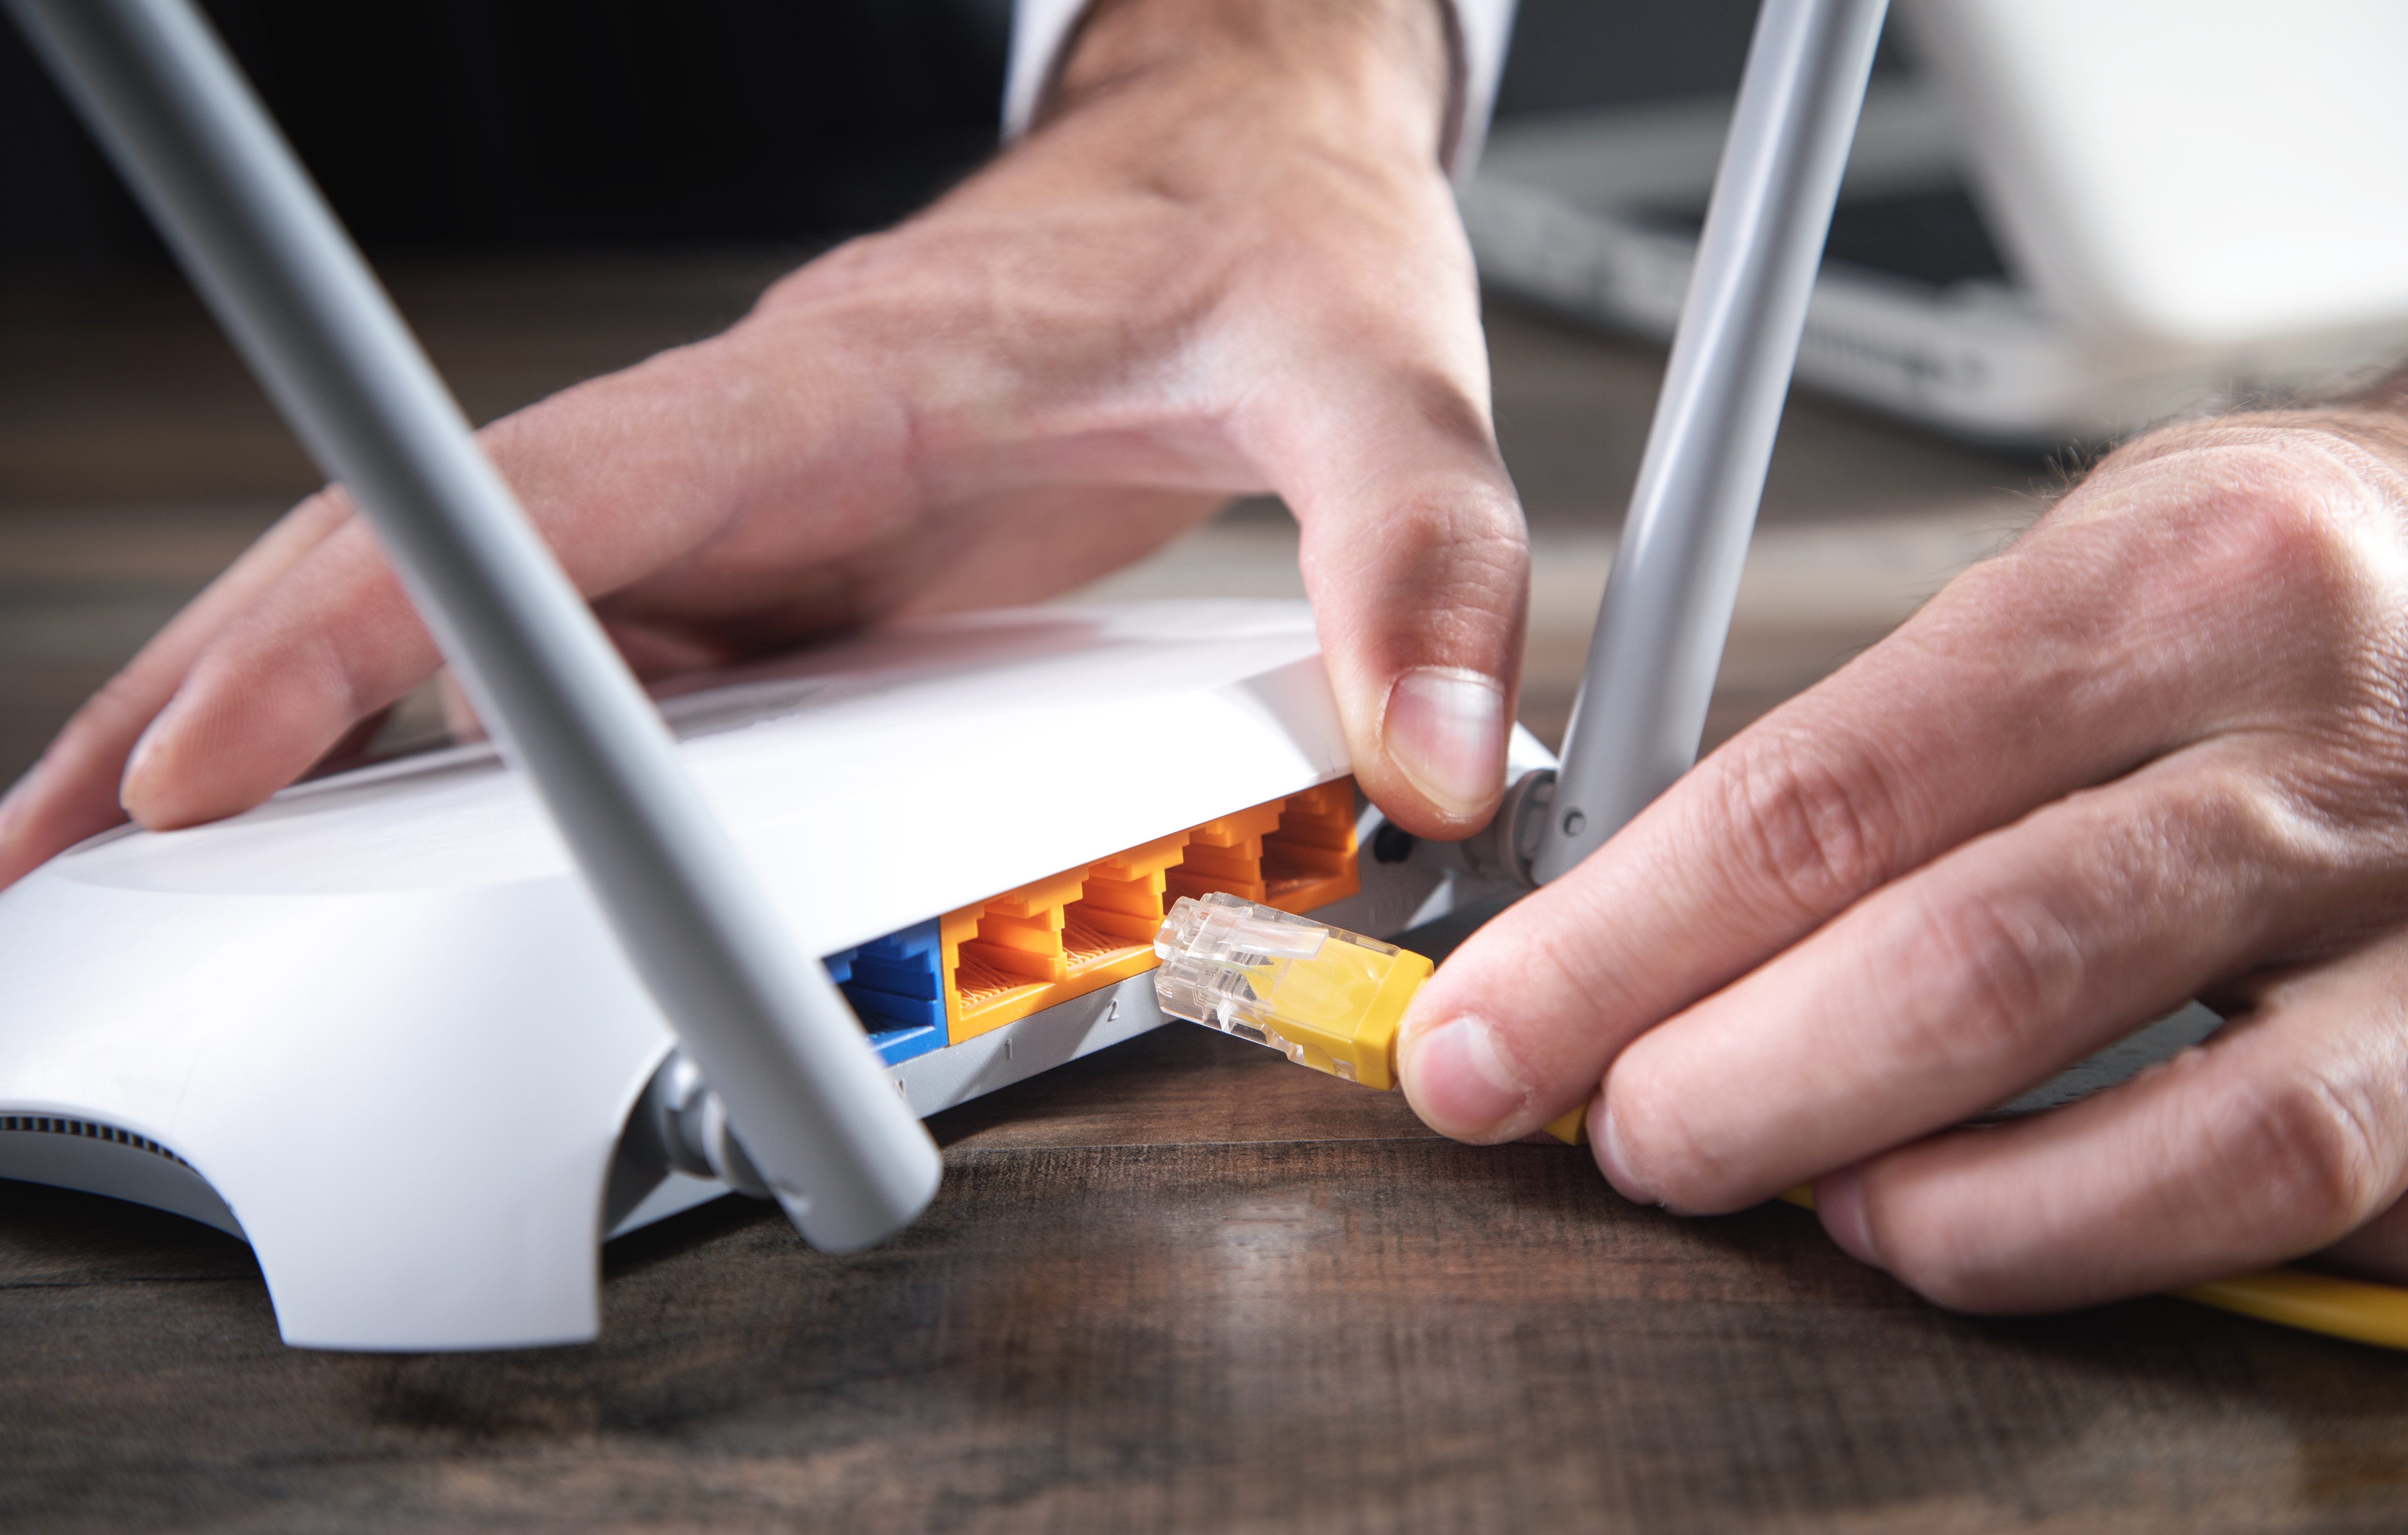 Un hombre enchufando un cable a un router de internet | Fuente: Shutterstock